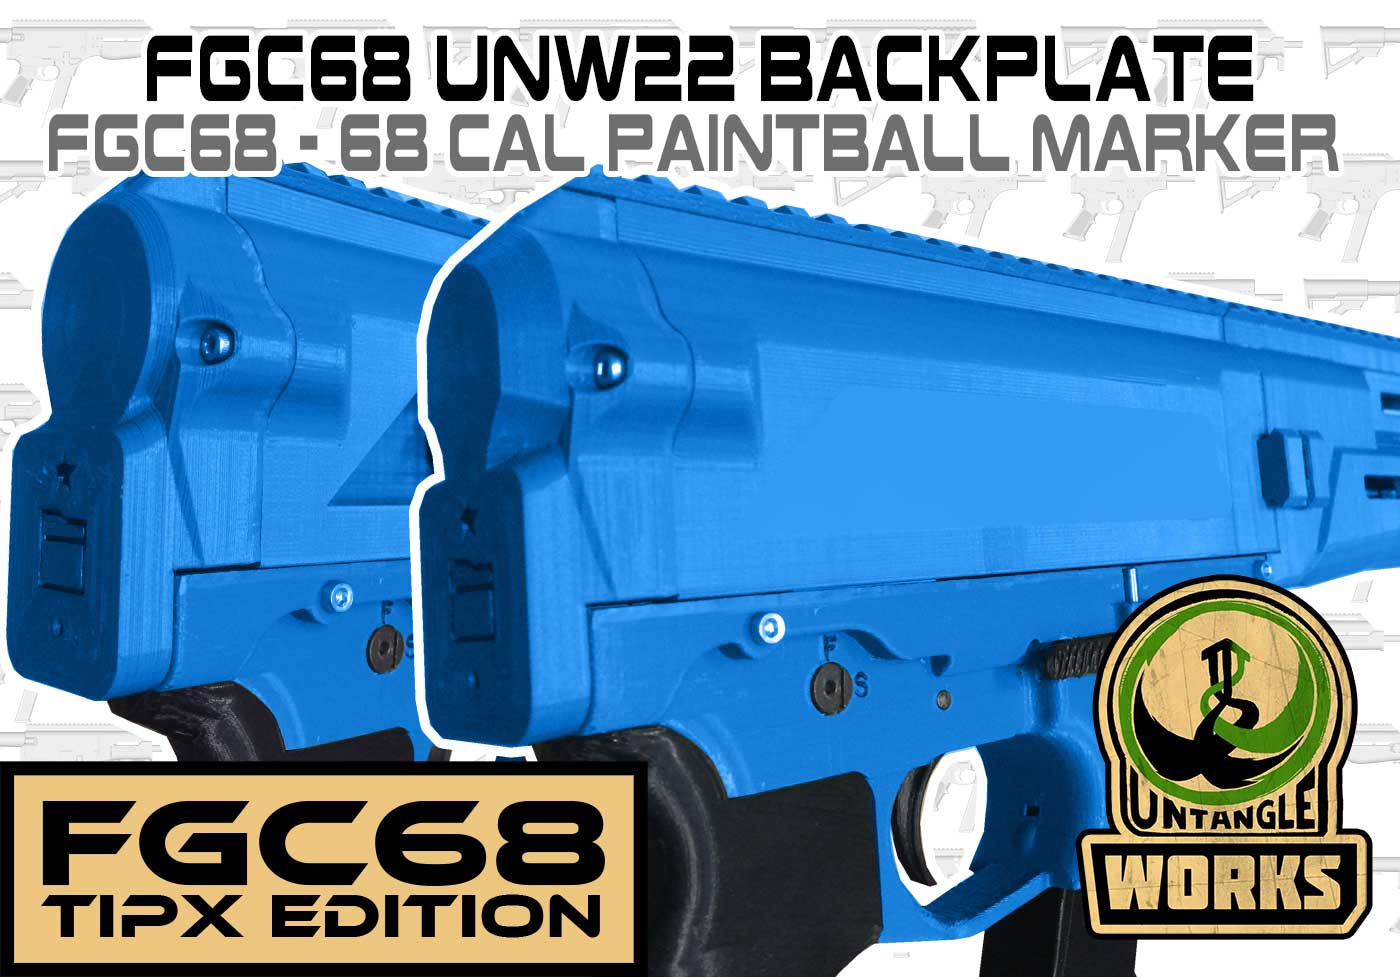 FGC-68 UNW22 backplate